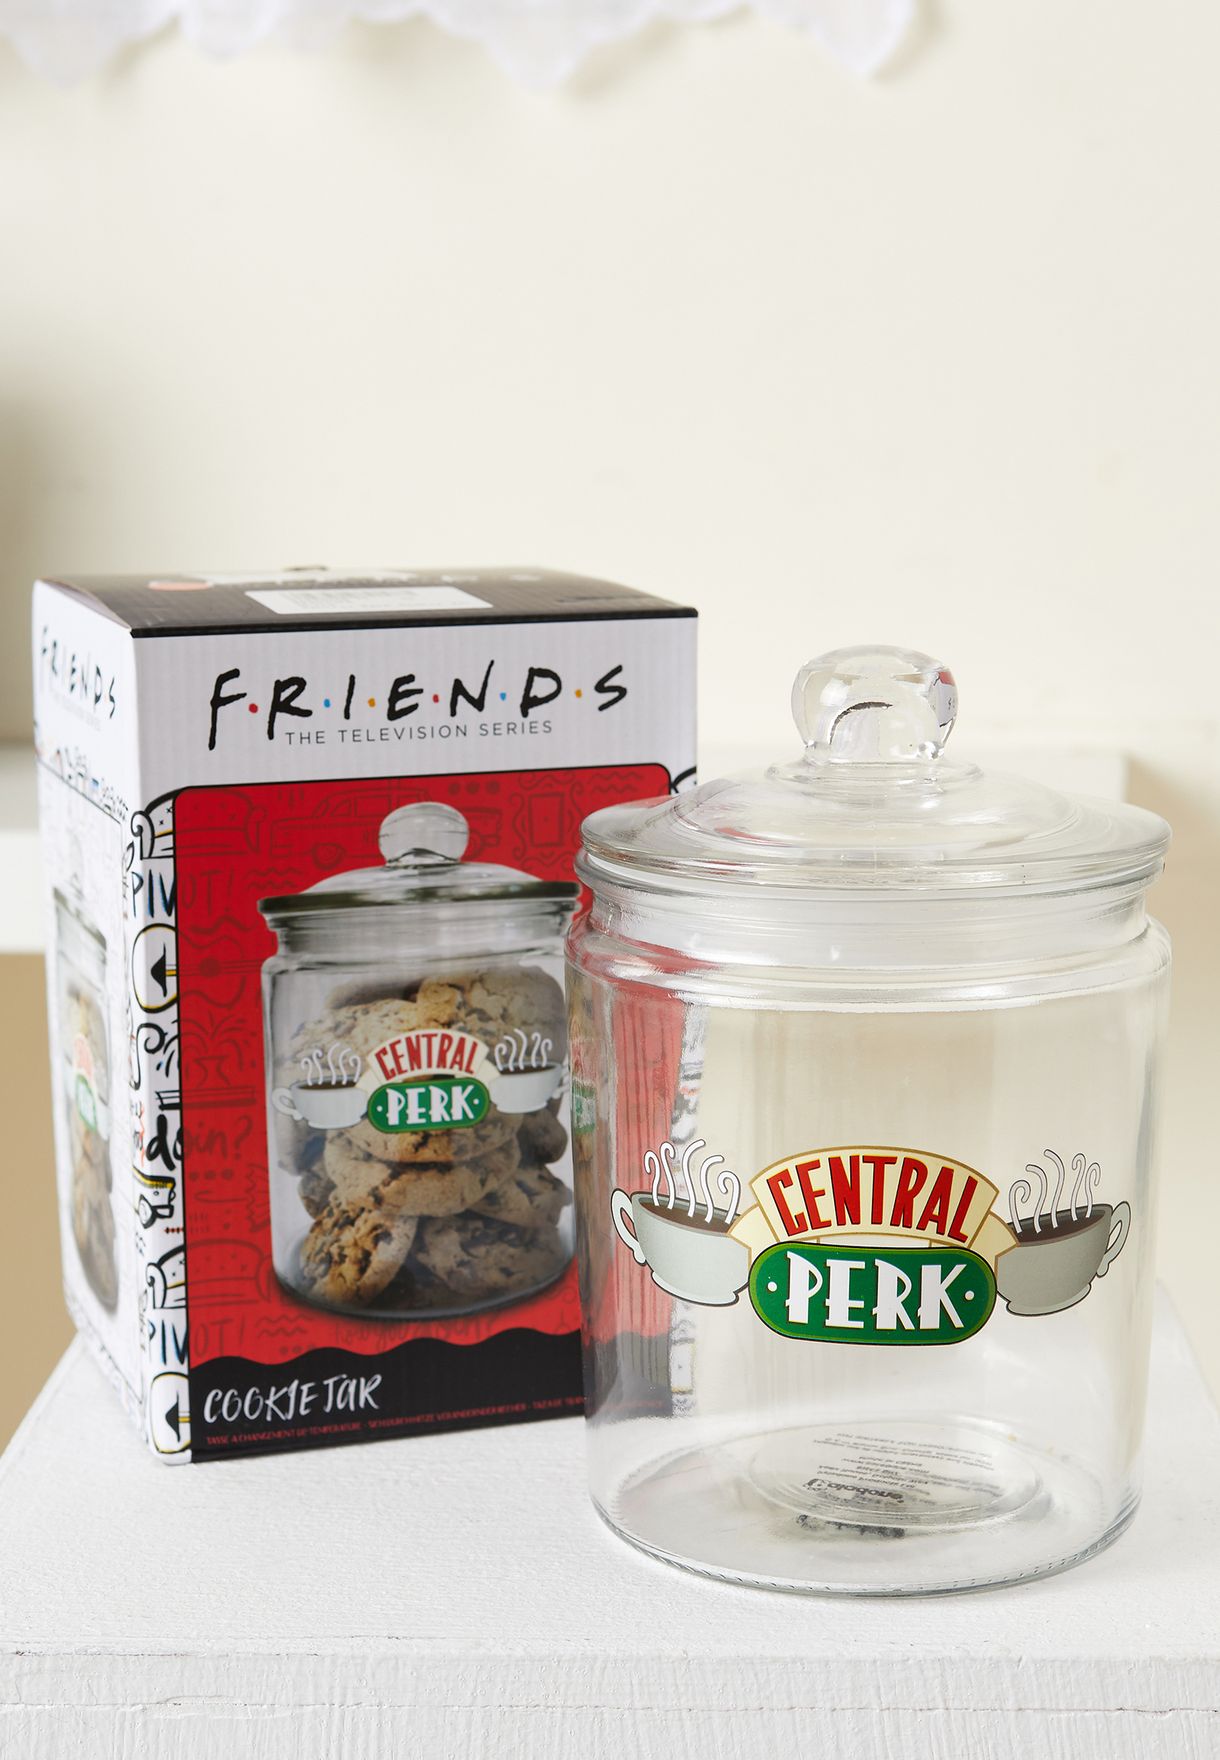 Friends Central Perk Ceramic Cookie Jar